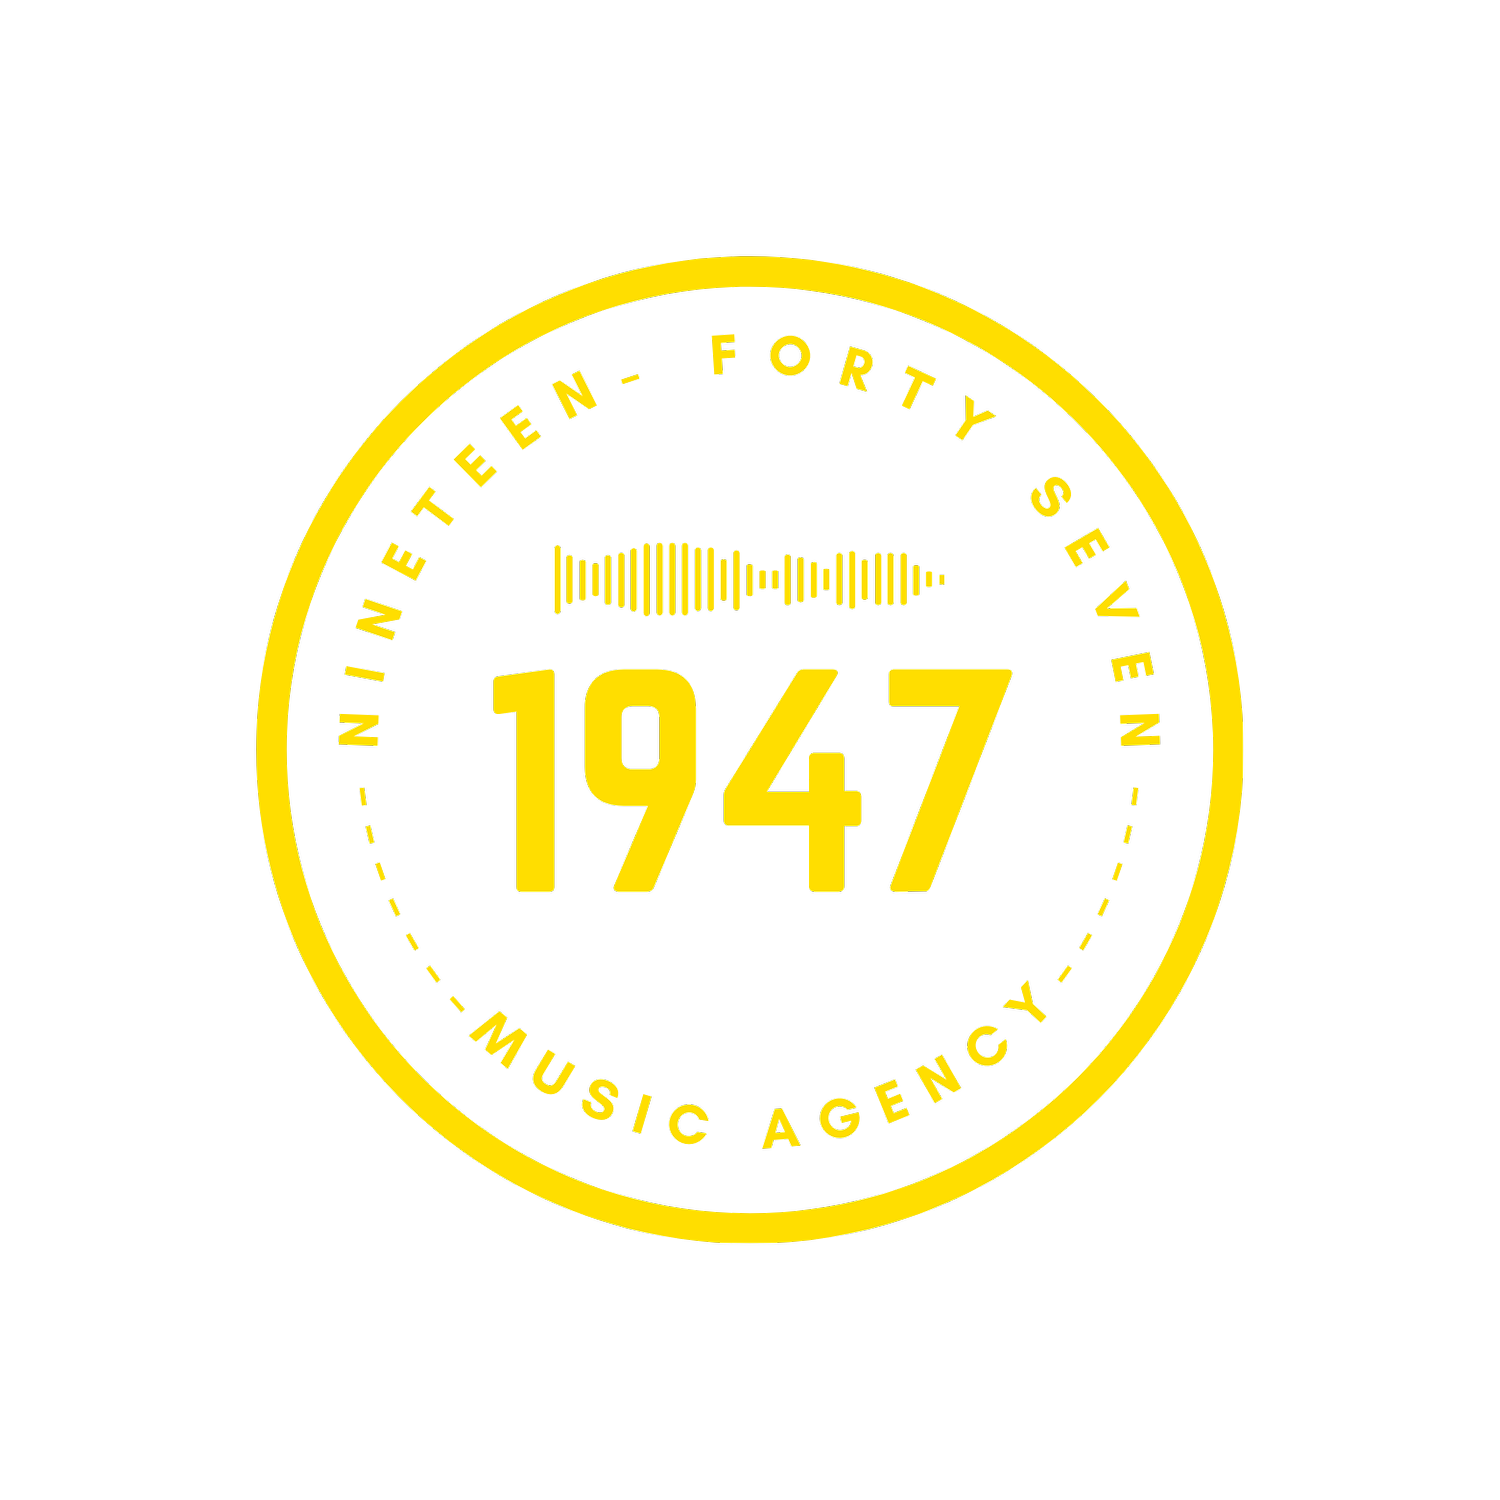 1947 Music Agency